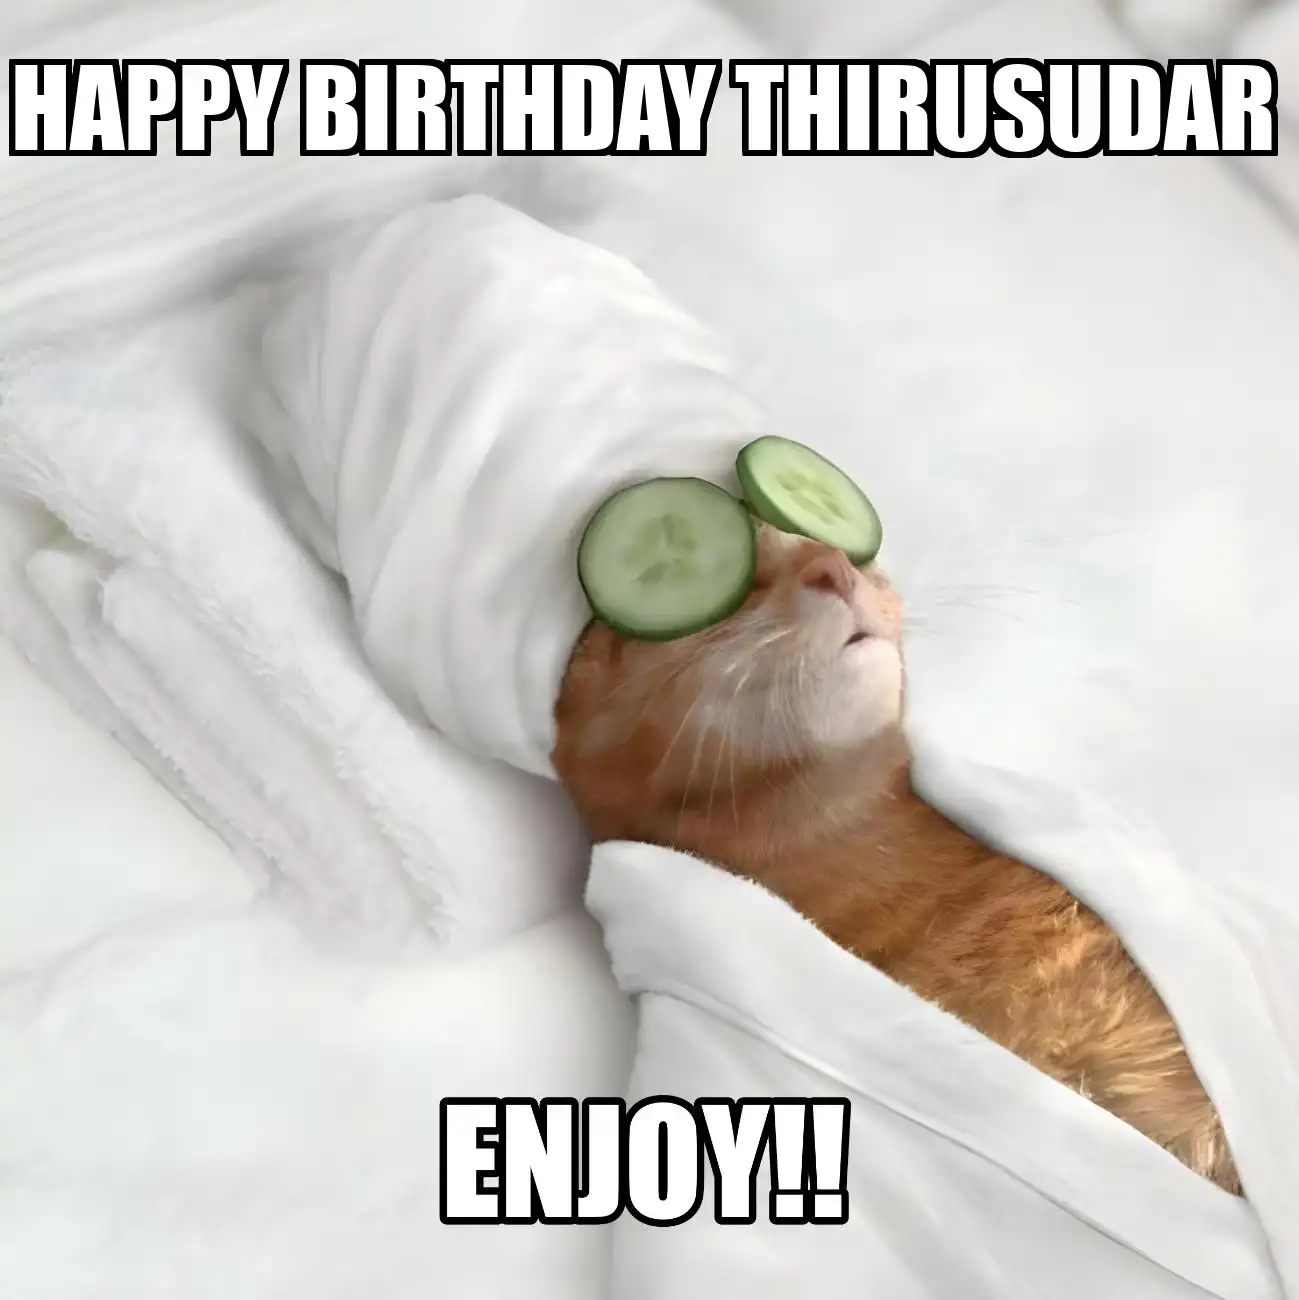 Happy Birthday Thirusudar Enjoy Cat Meme